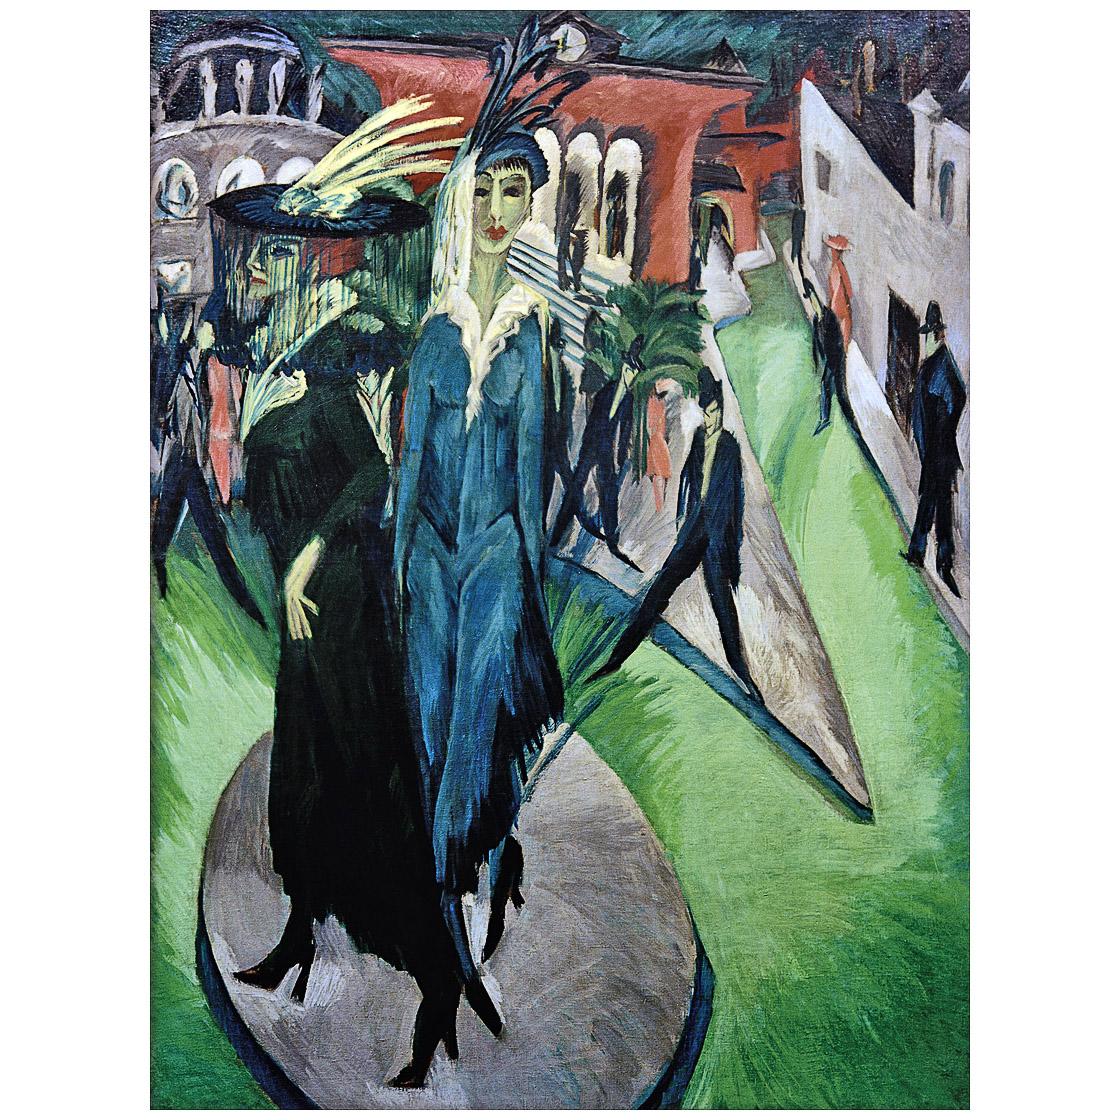 Ernst Ludwig Kirchner. Potsdamer Platz. 1914. Neue Nationalgalerie Berlin